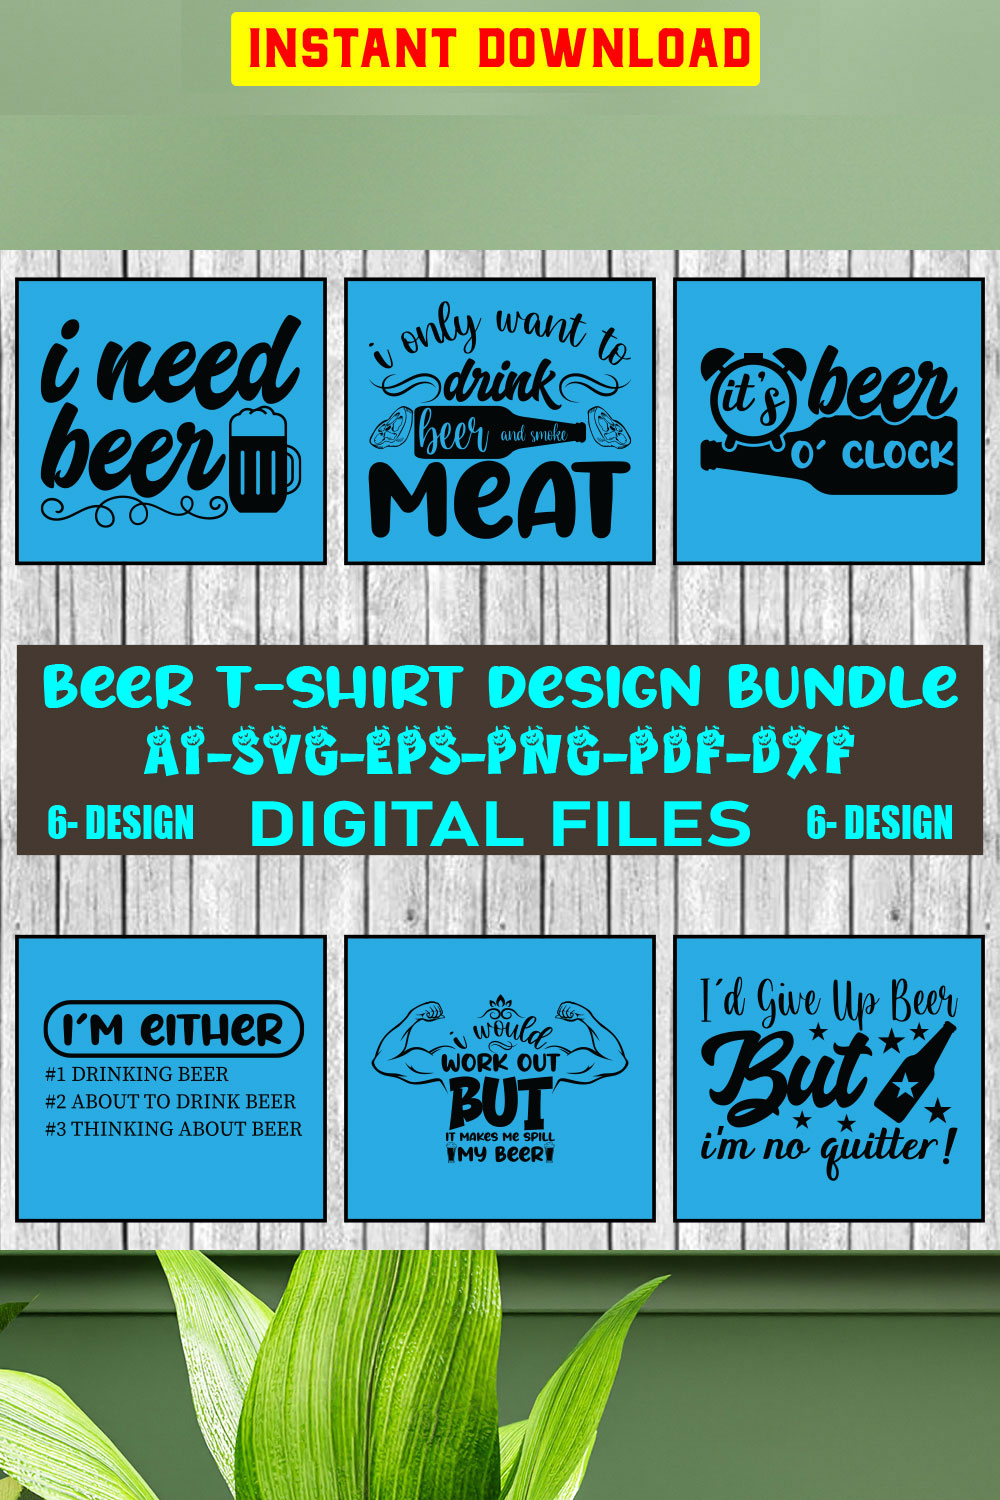 Beer T-shirt Design Bundle Vol-3 pinterest preview image.